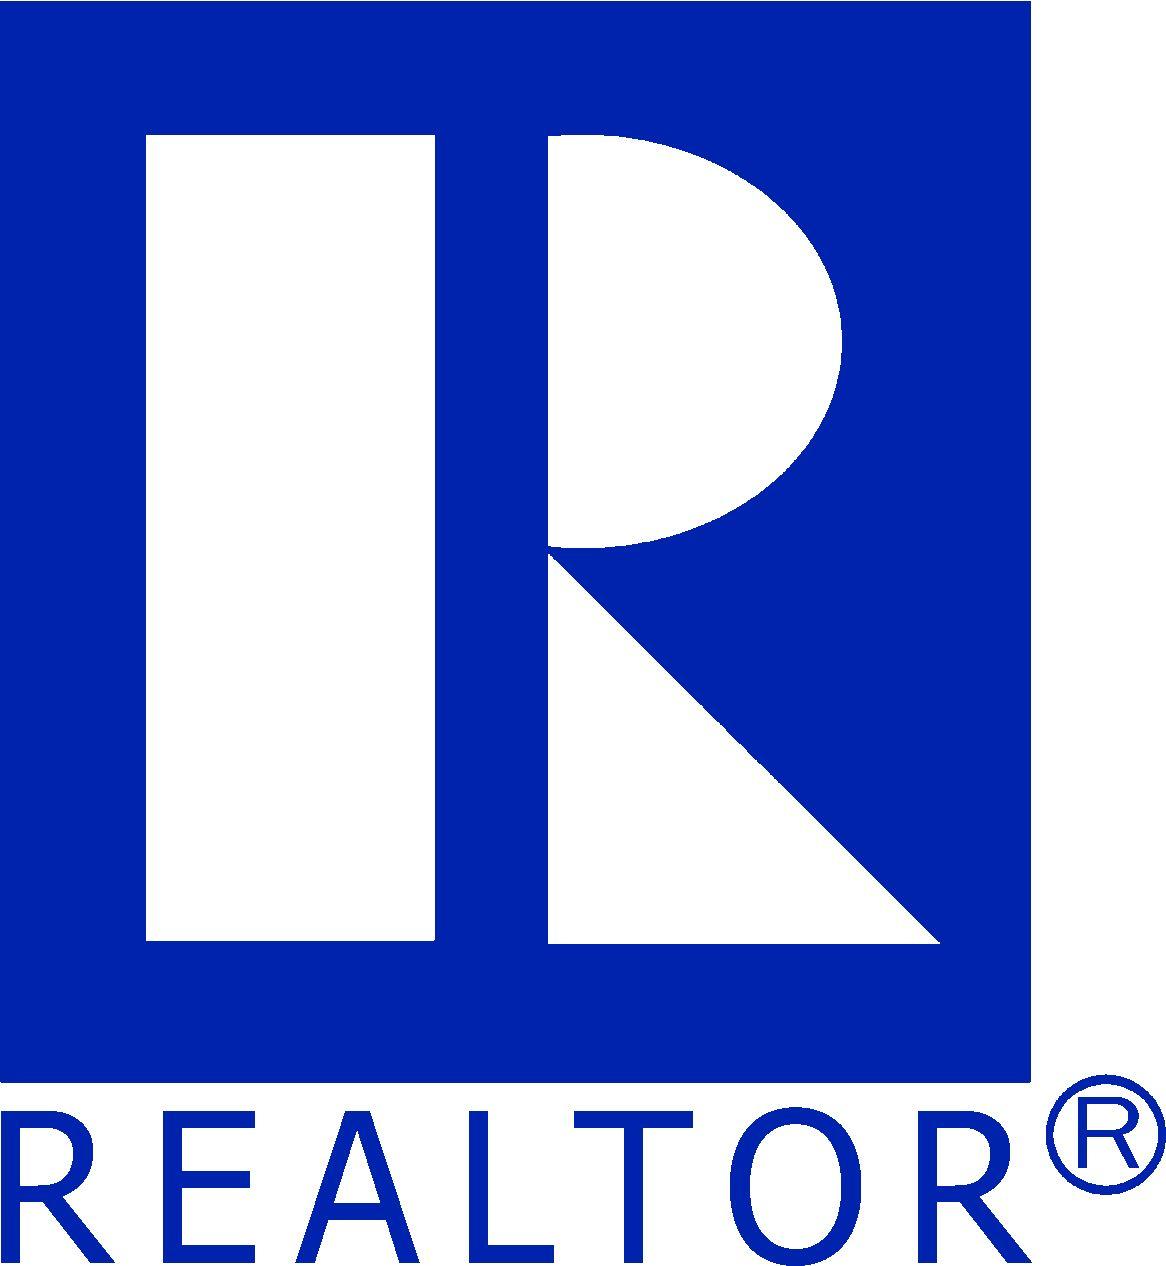 Realter Logo - Downloadable Real Estate Industry Logos REALTORS